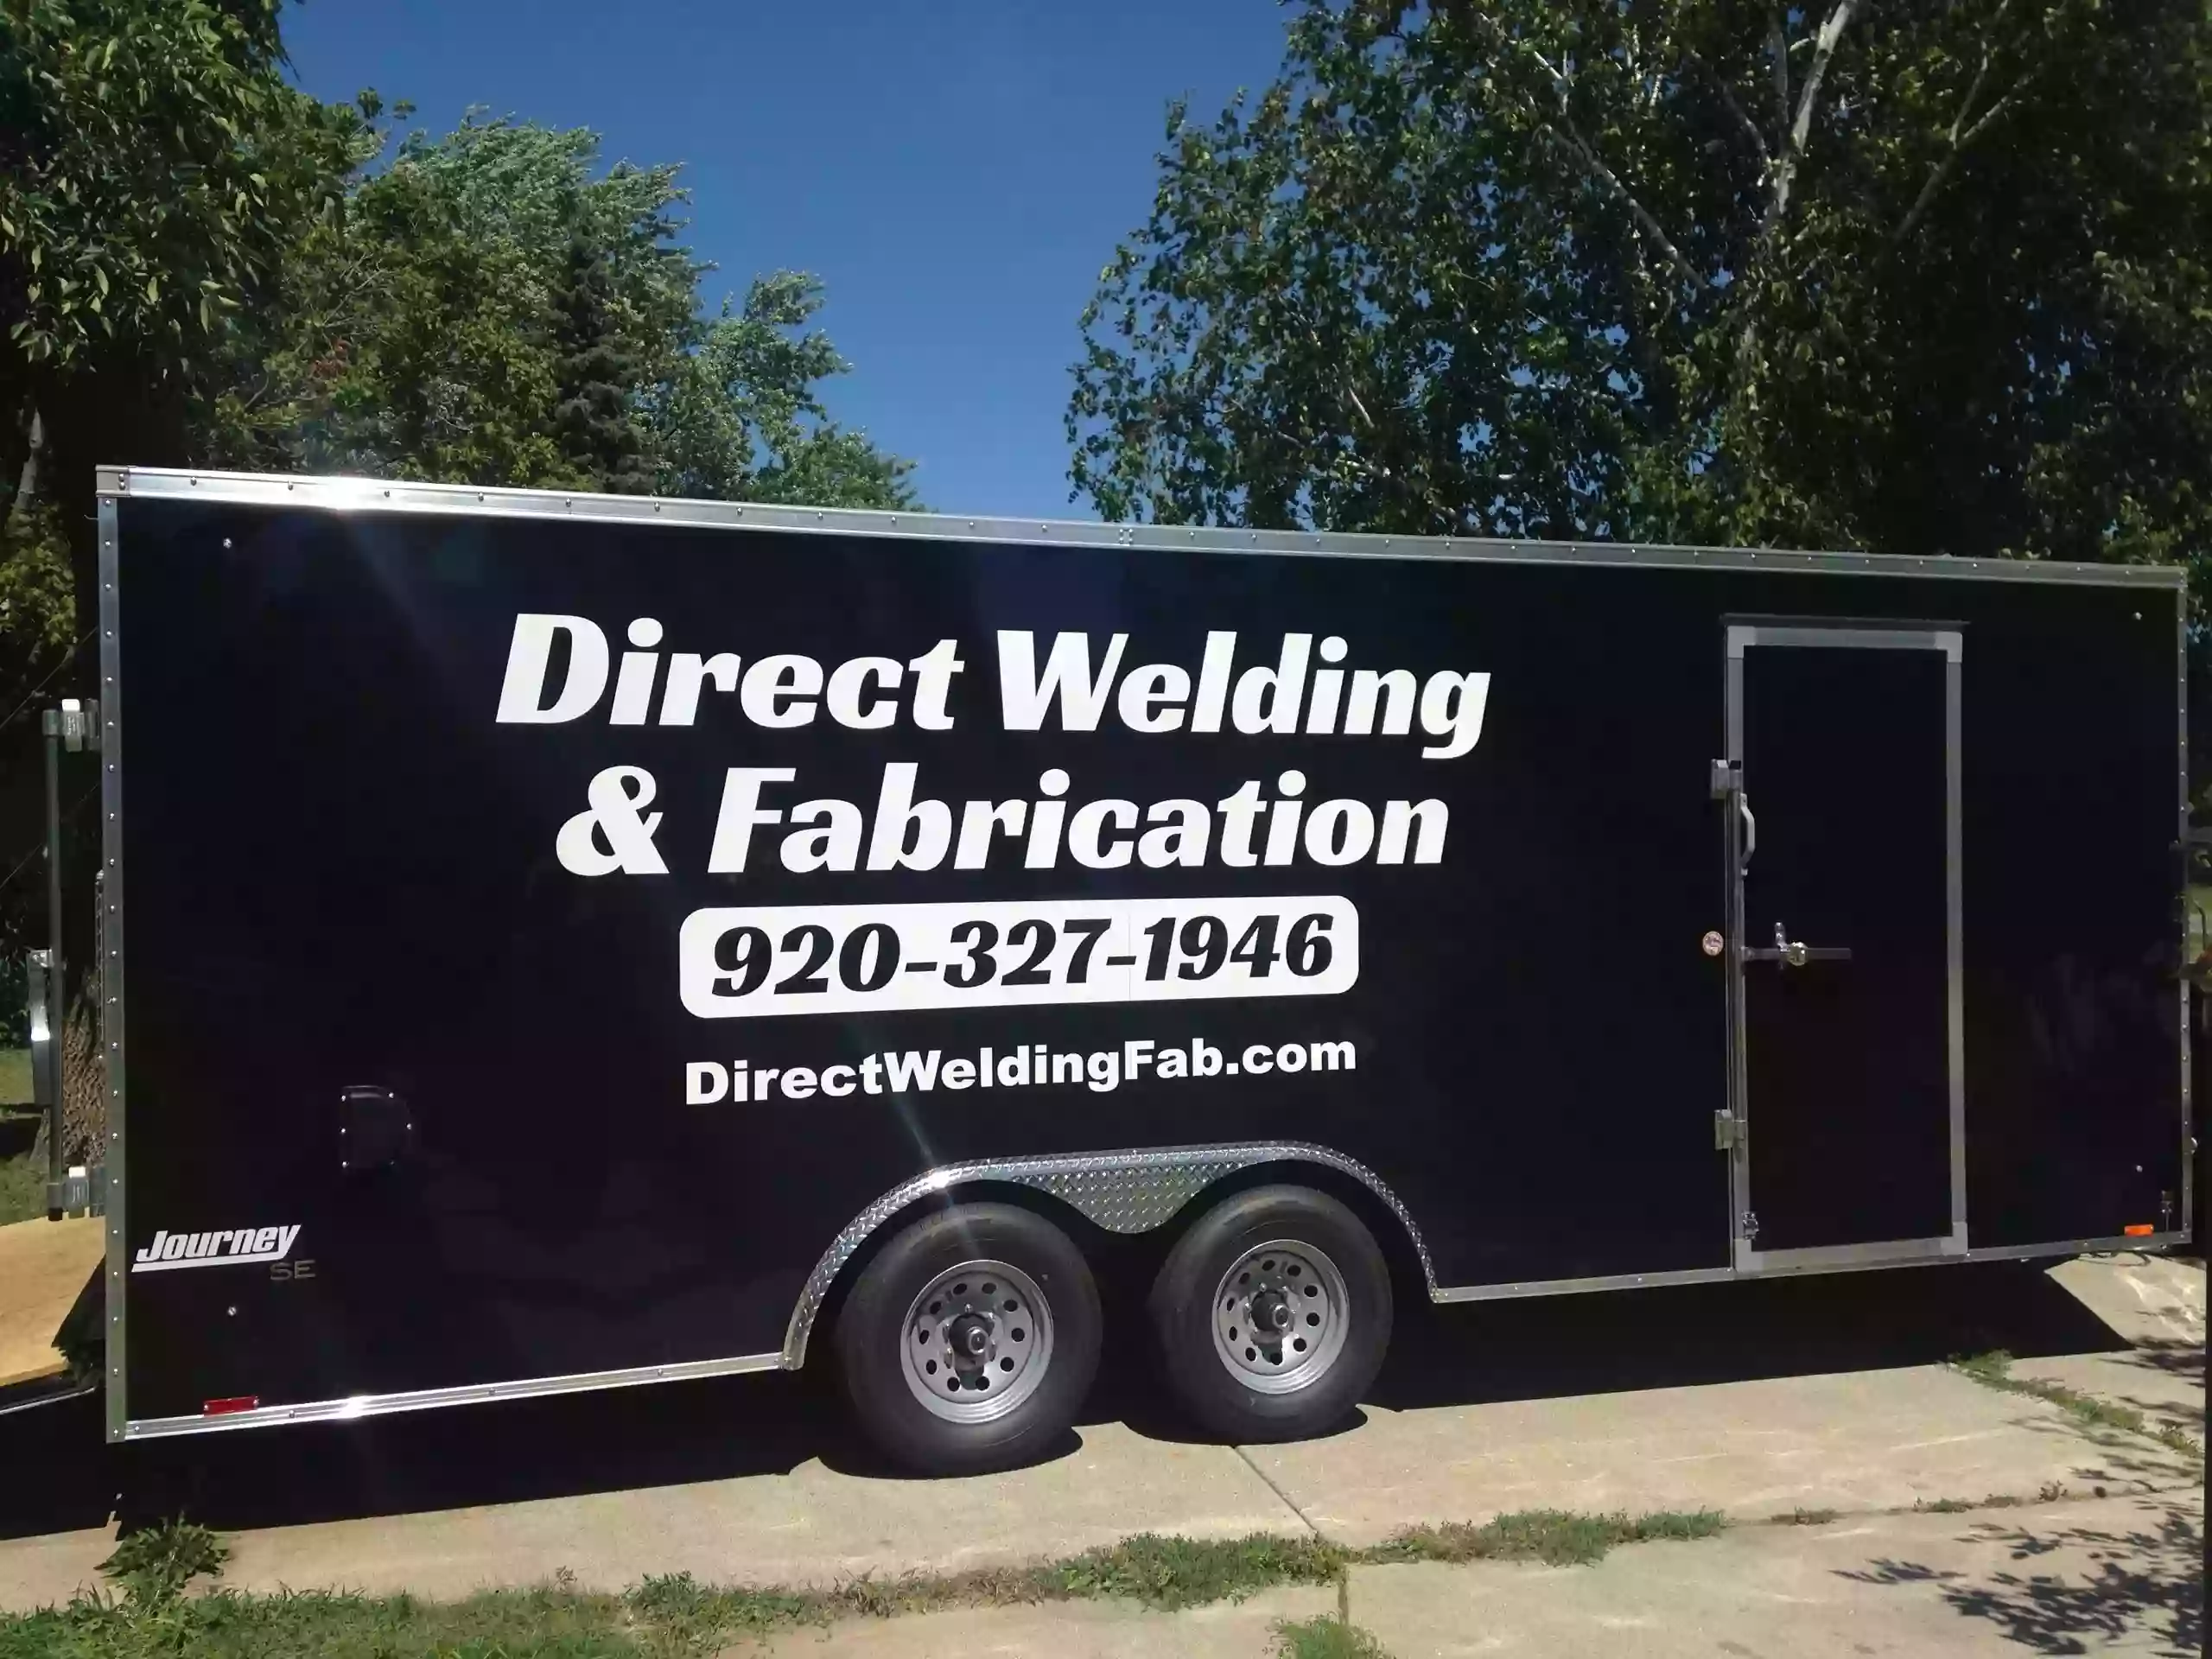 Direct Welding & Fabrication